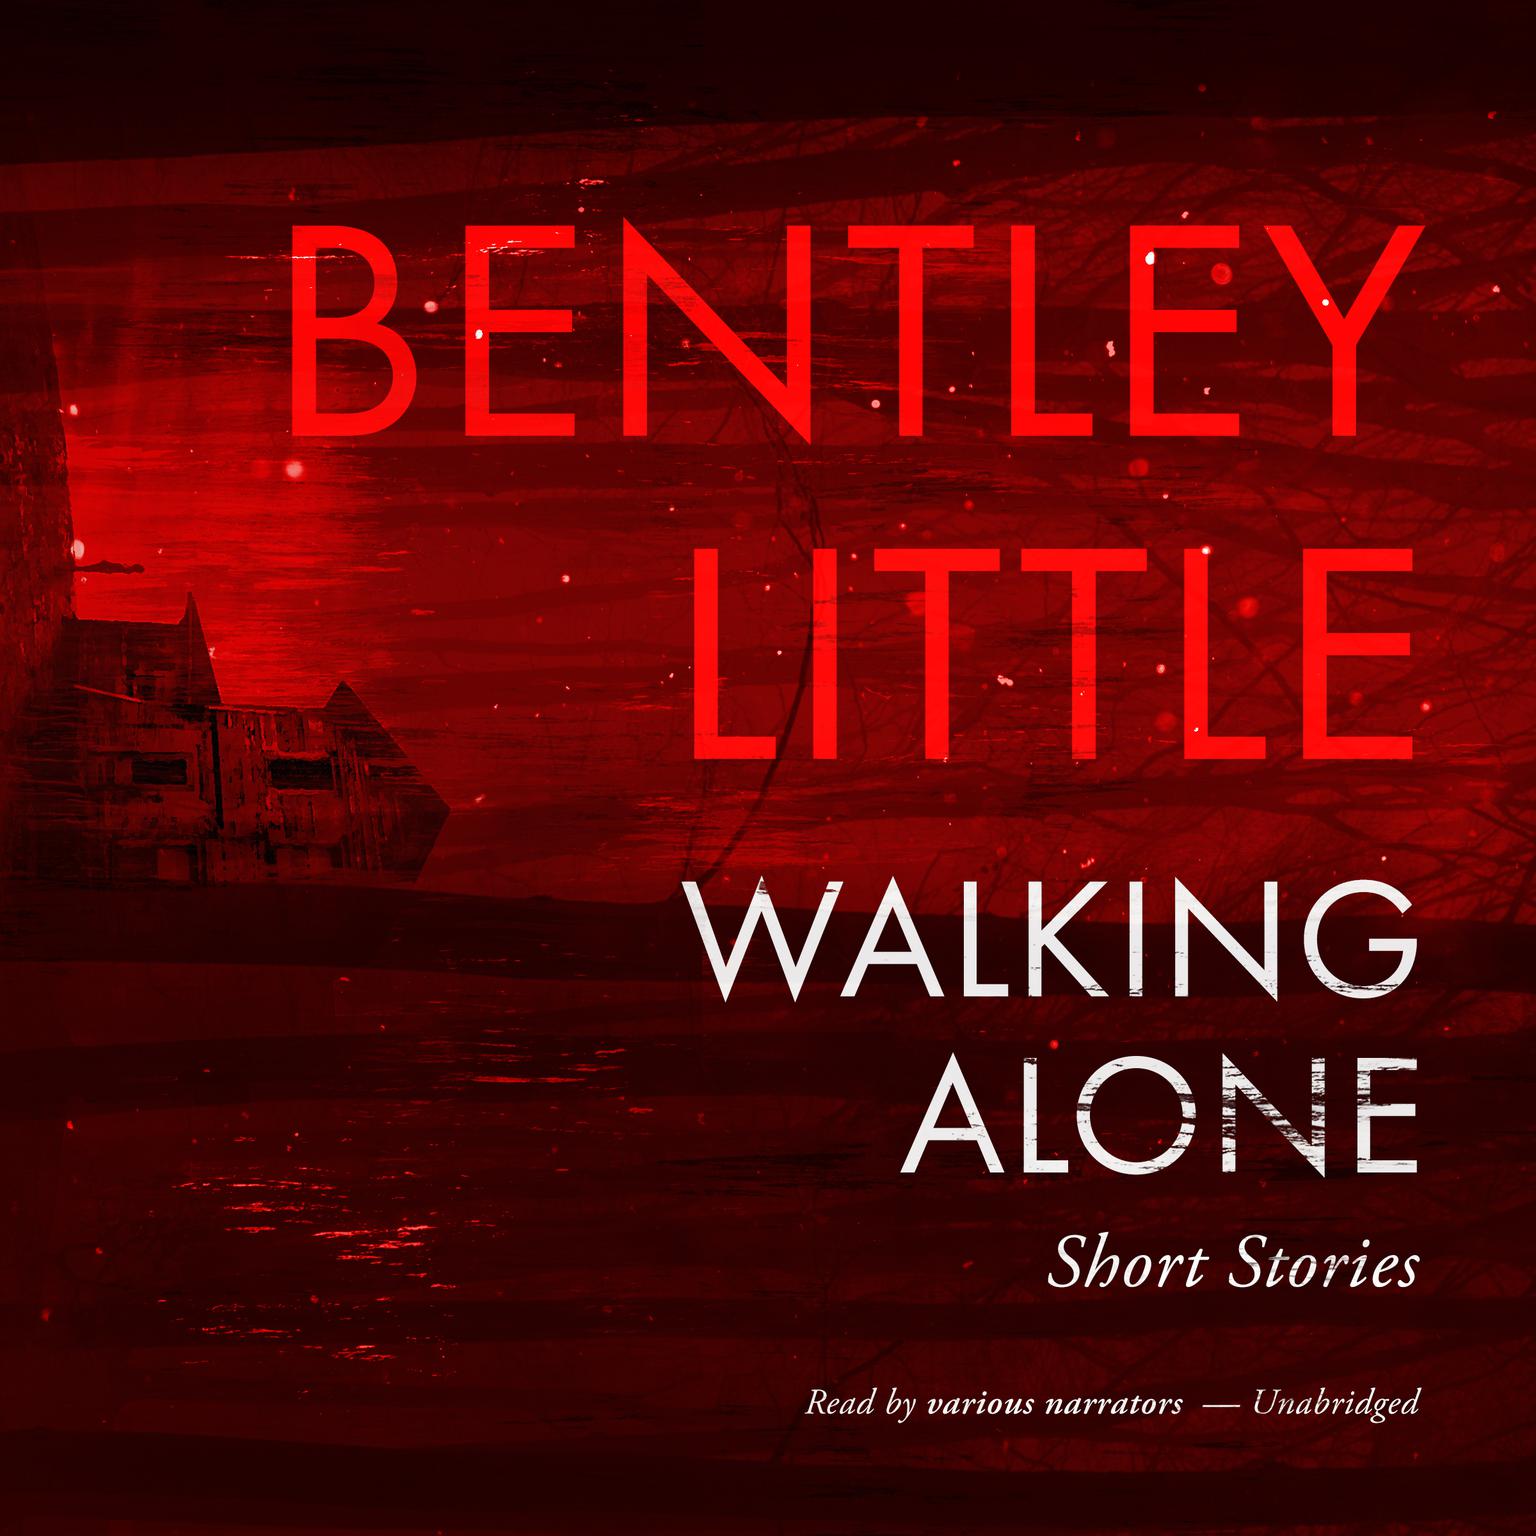 Walking Alone: Short Stories Audiobook, by Bentley Little